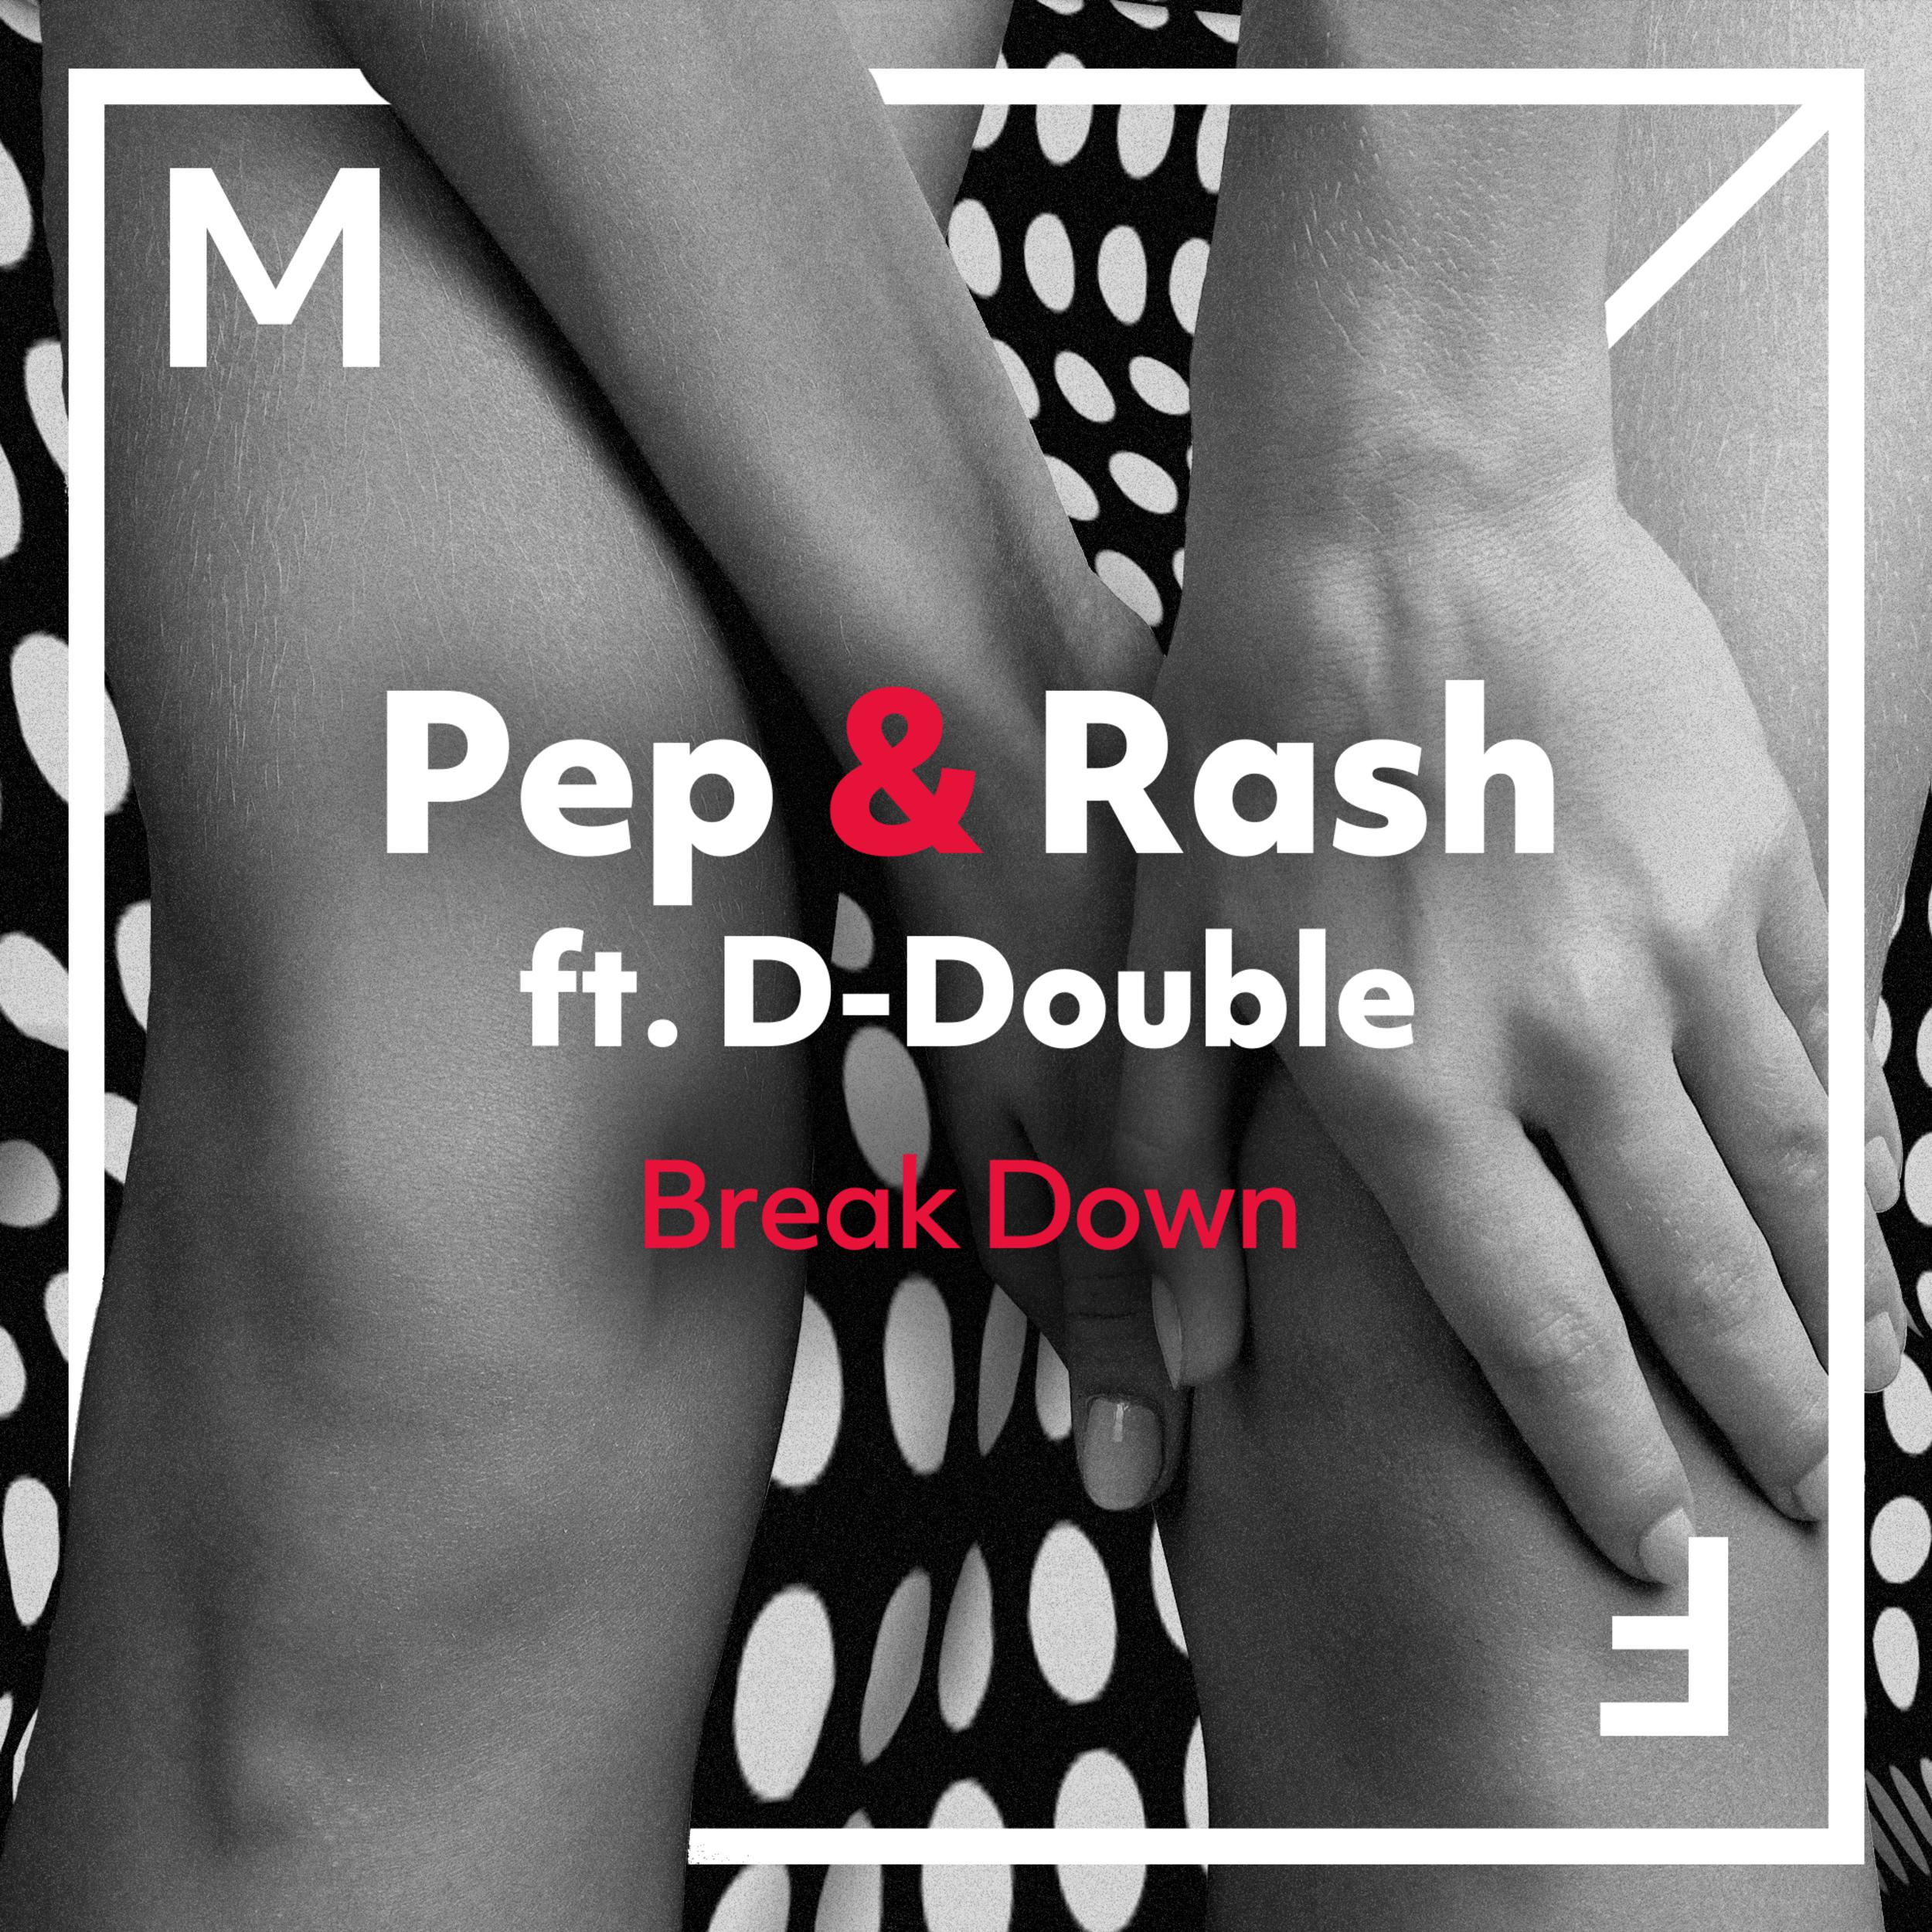 Break Down (Extended Mix)